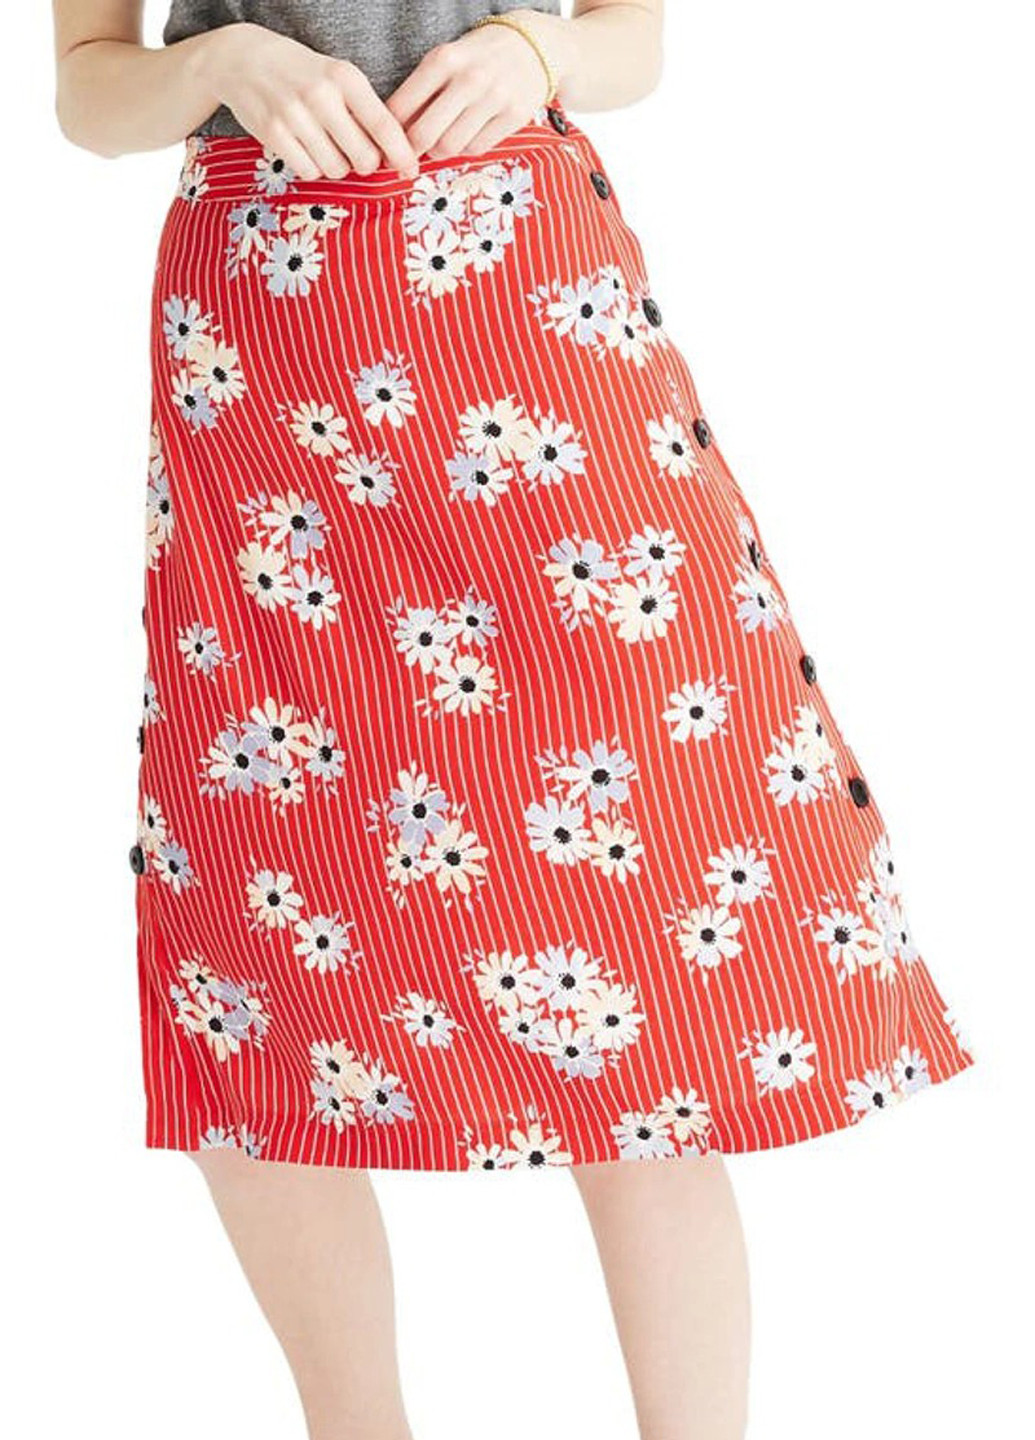 Красная кэжуал цветочной расцветки юбка Madewell а-силуэта (трапеция)